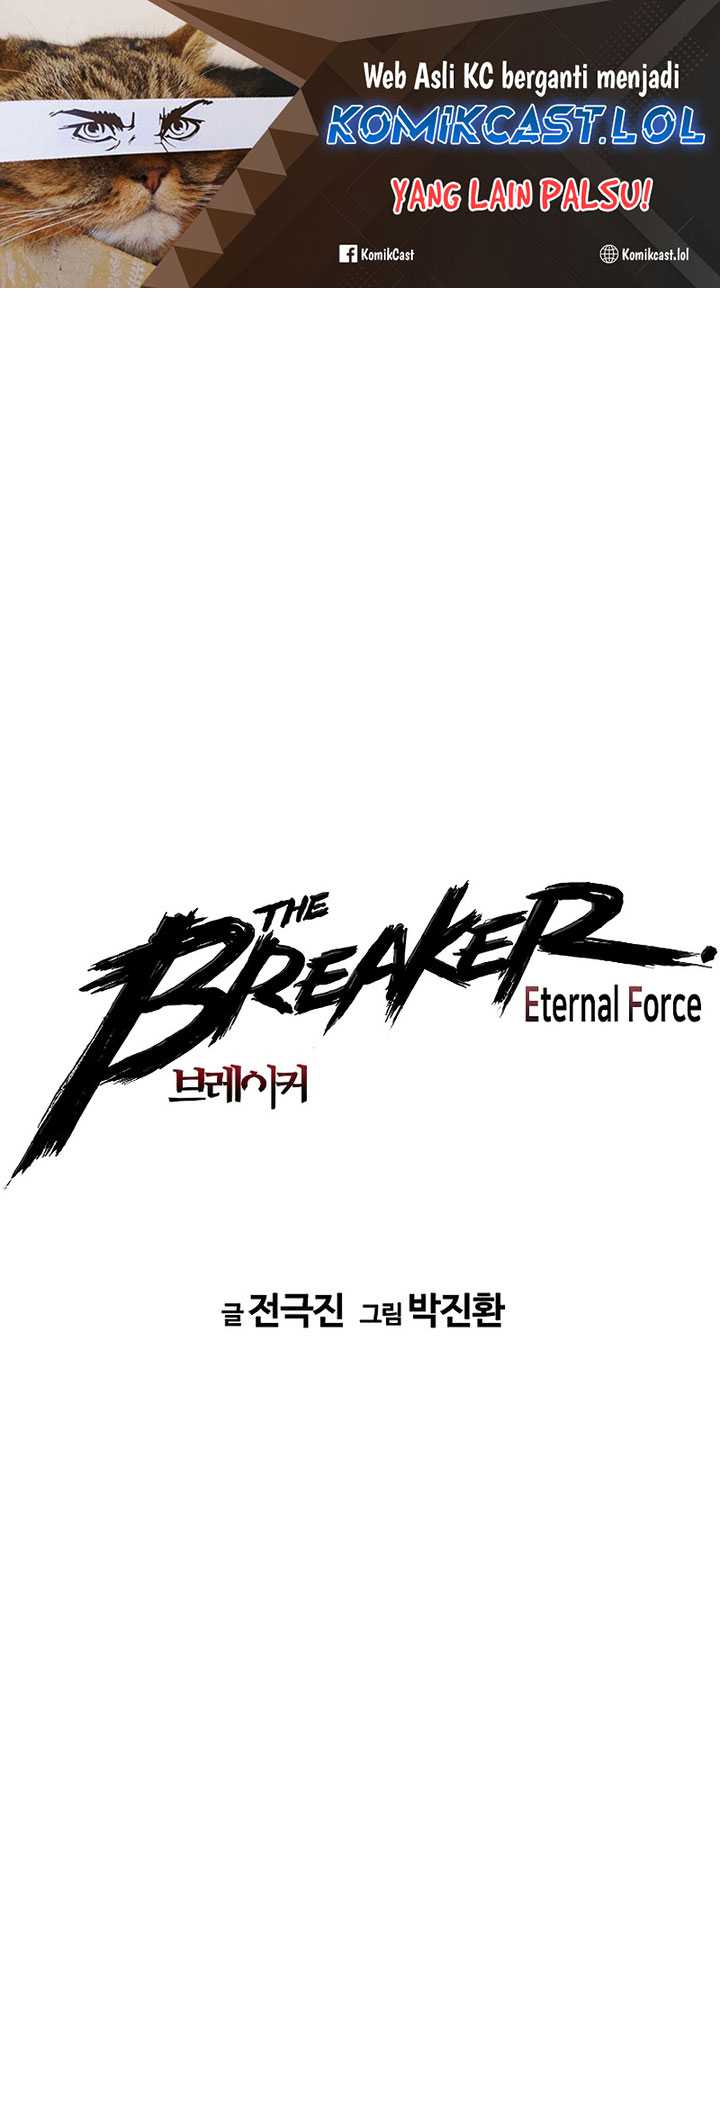 The Breaker Eternal Force Chapter 91